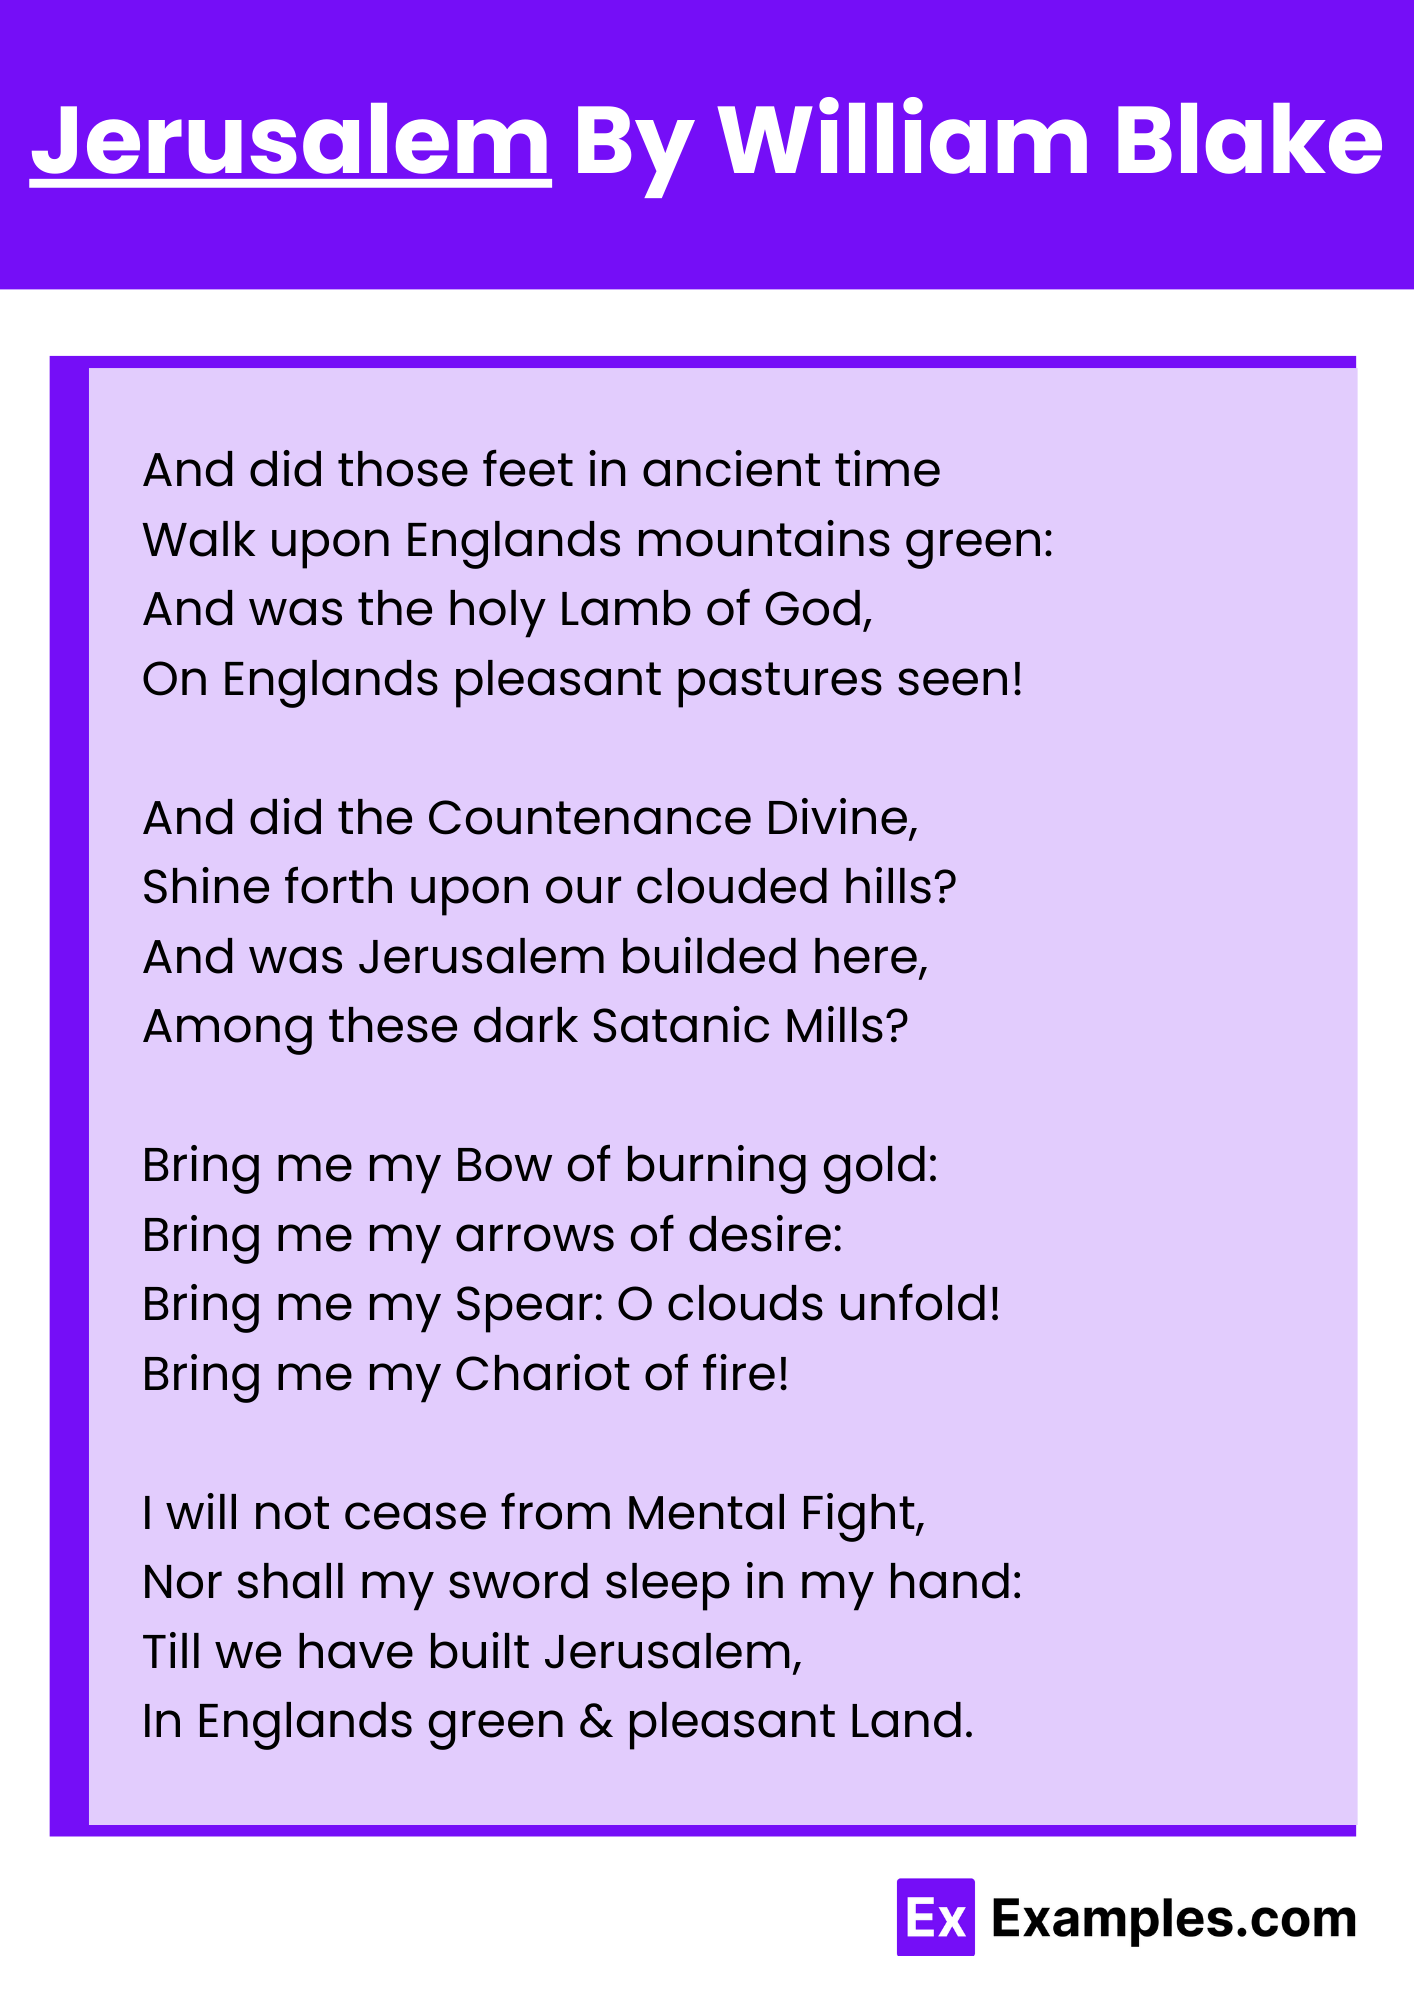 Jerusalem By William Blake